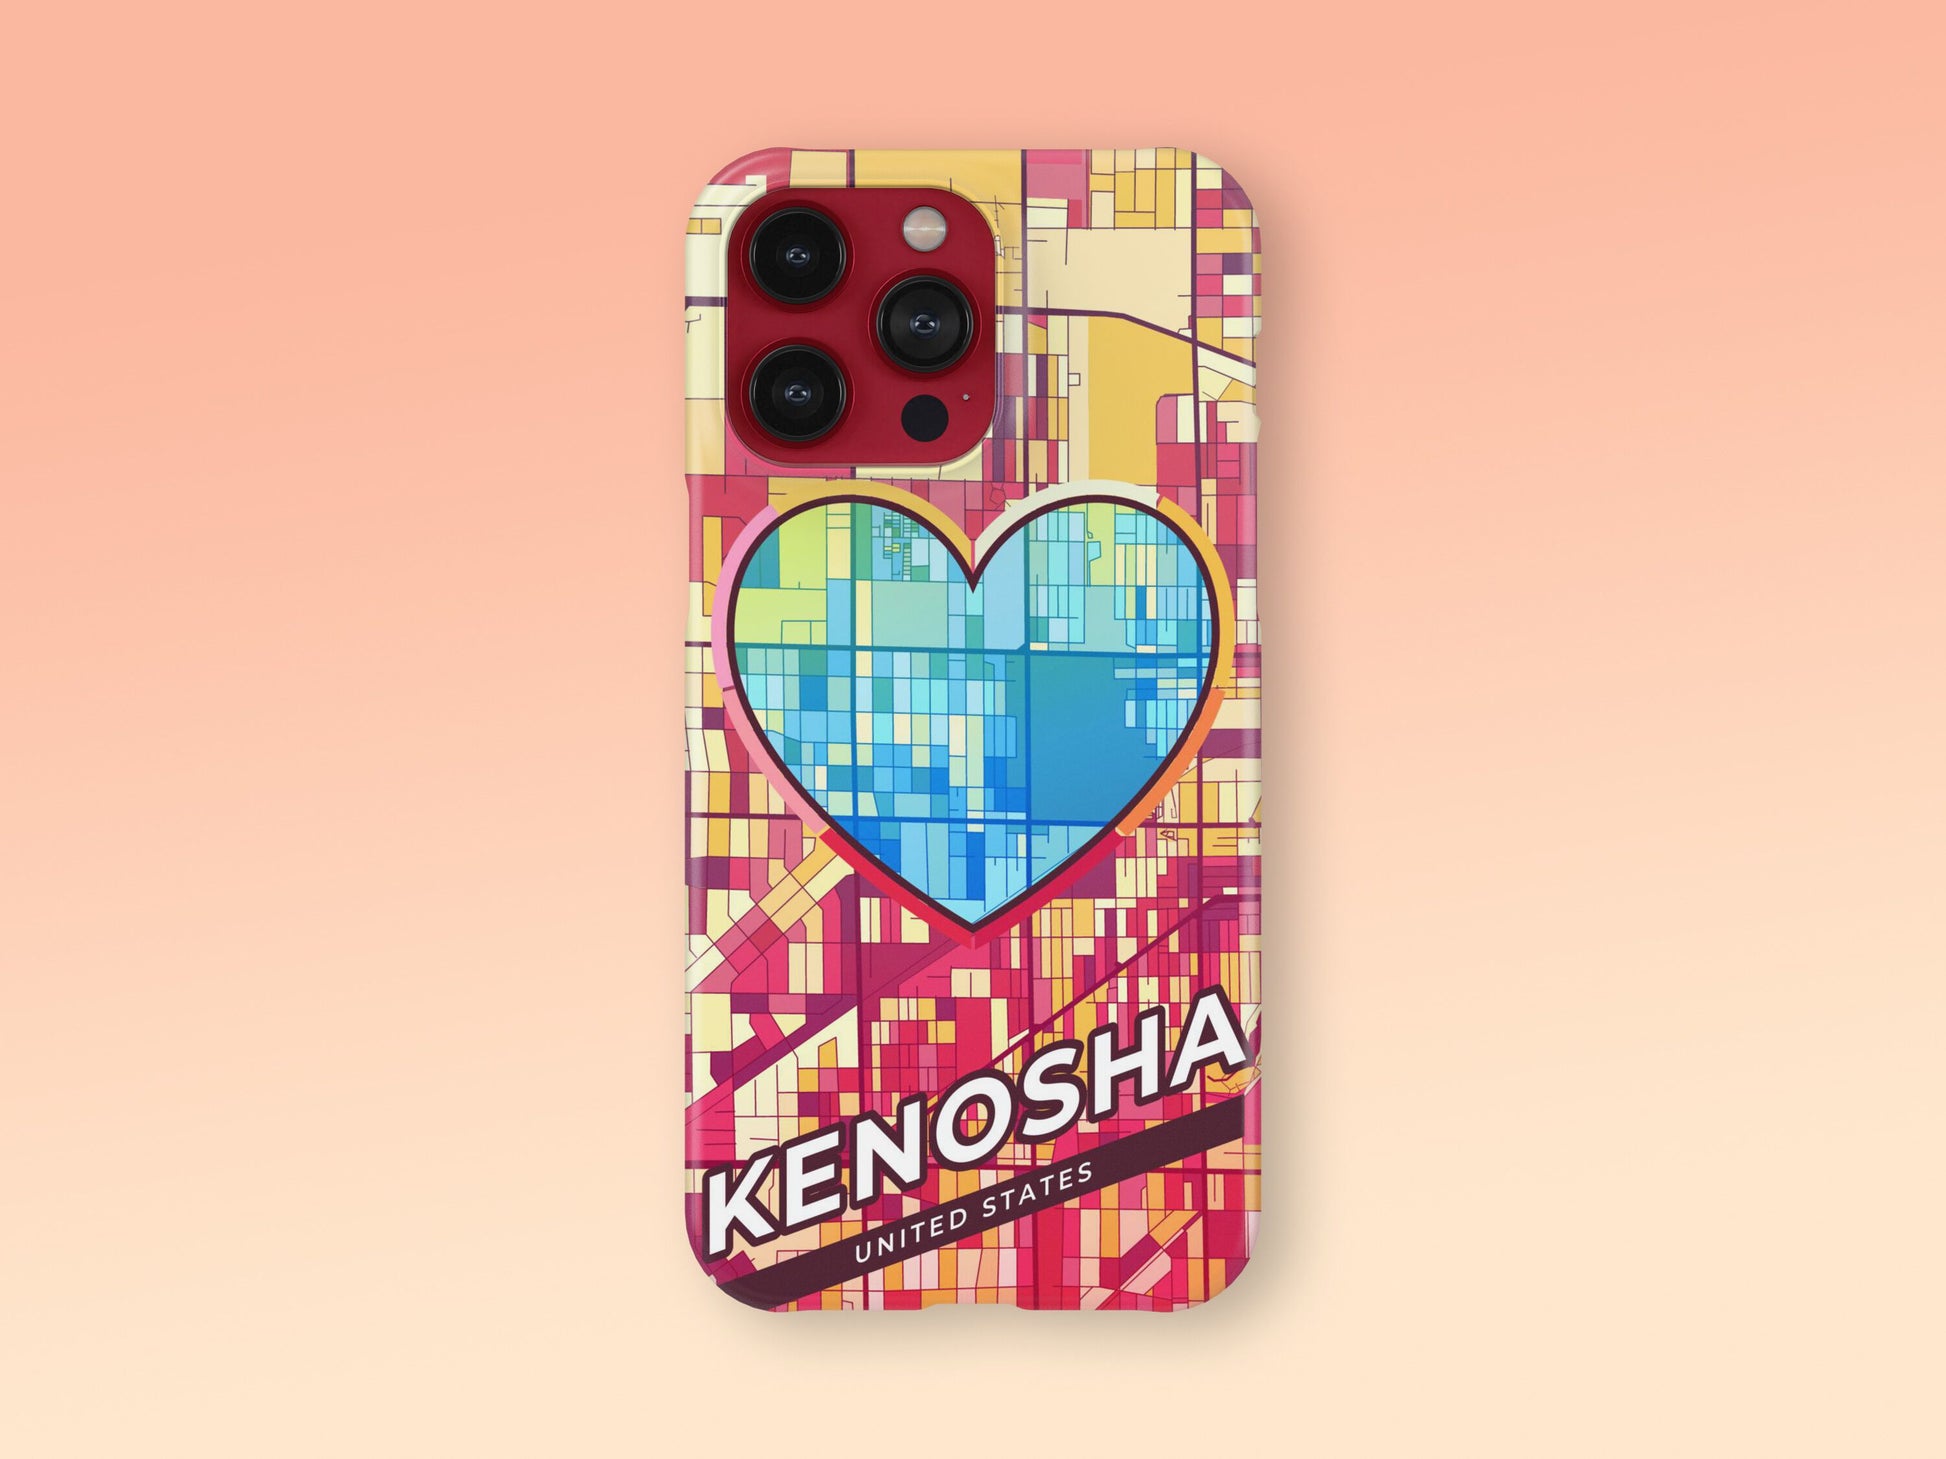 Kenosha Wisconsin slim phone case with colorful icon. Birthday, wedding or housewarming gift. Couple match cases. 2